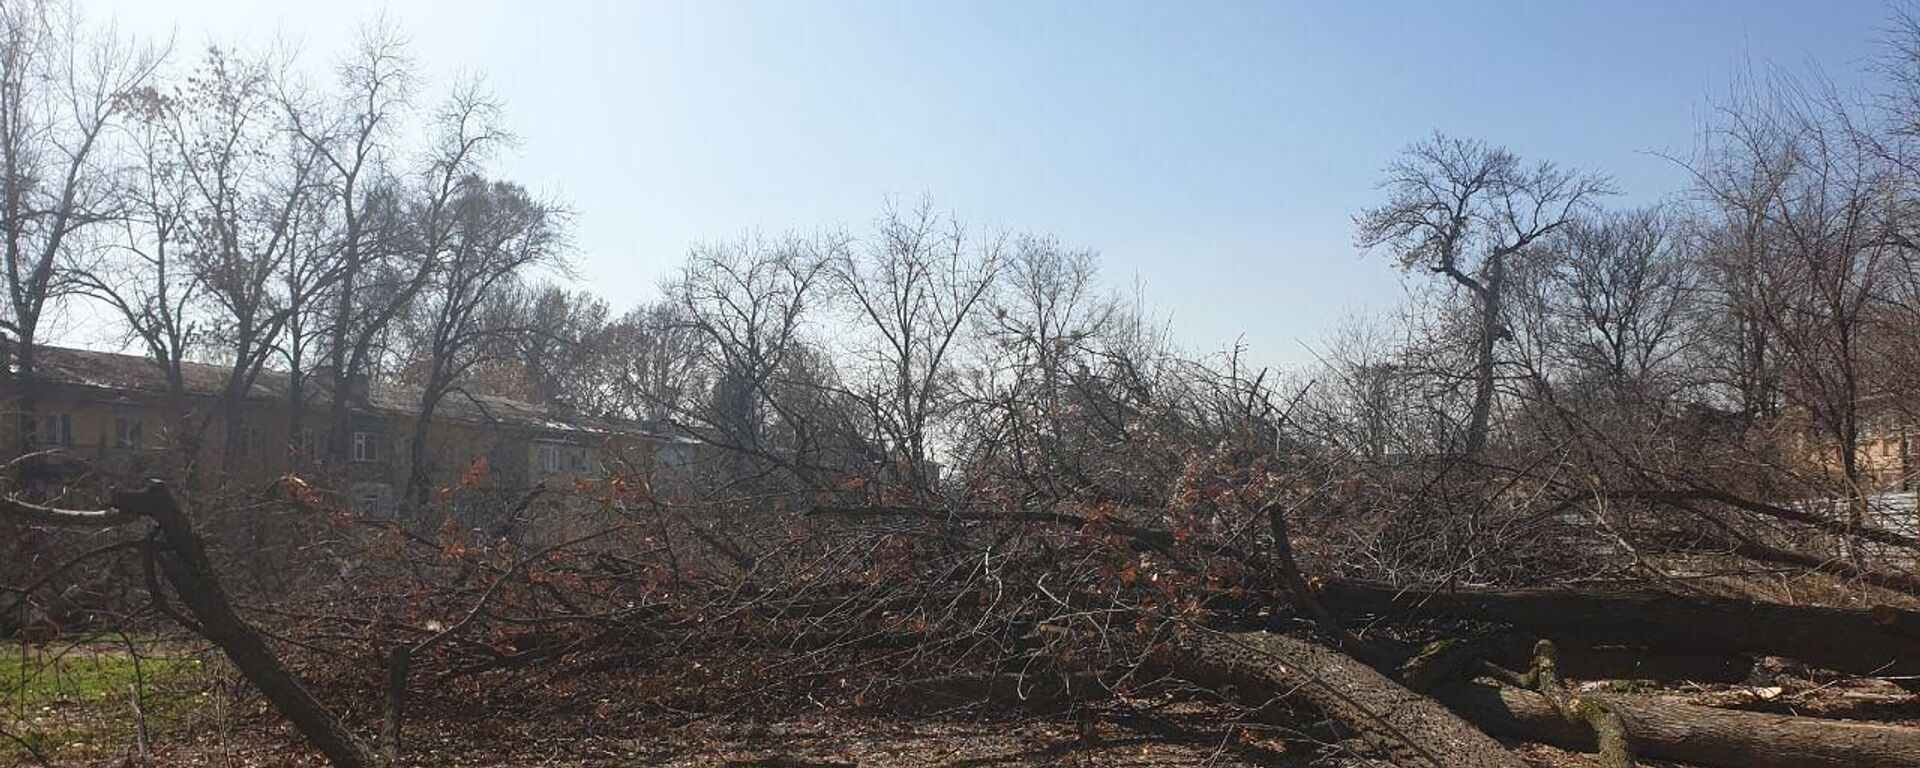 Незаконная вырубка деревьев в Яккасарайскм районе Ташкента - Sputnik Узбекистан, 1920, 31.01.2021